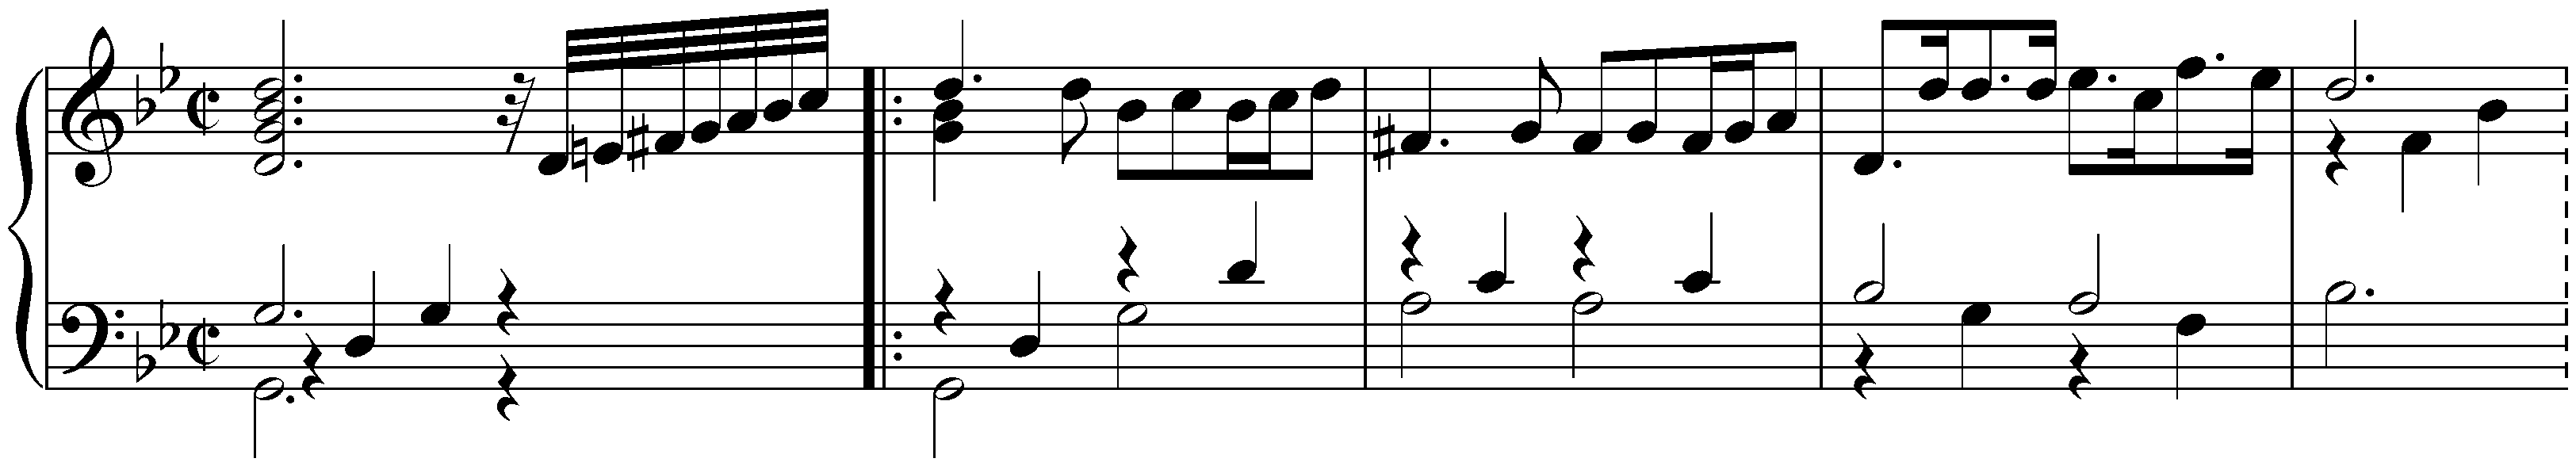 Overture in G minor, BWV 822; 1. Overture